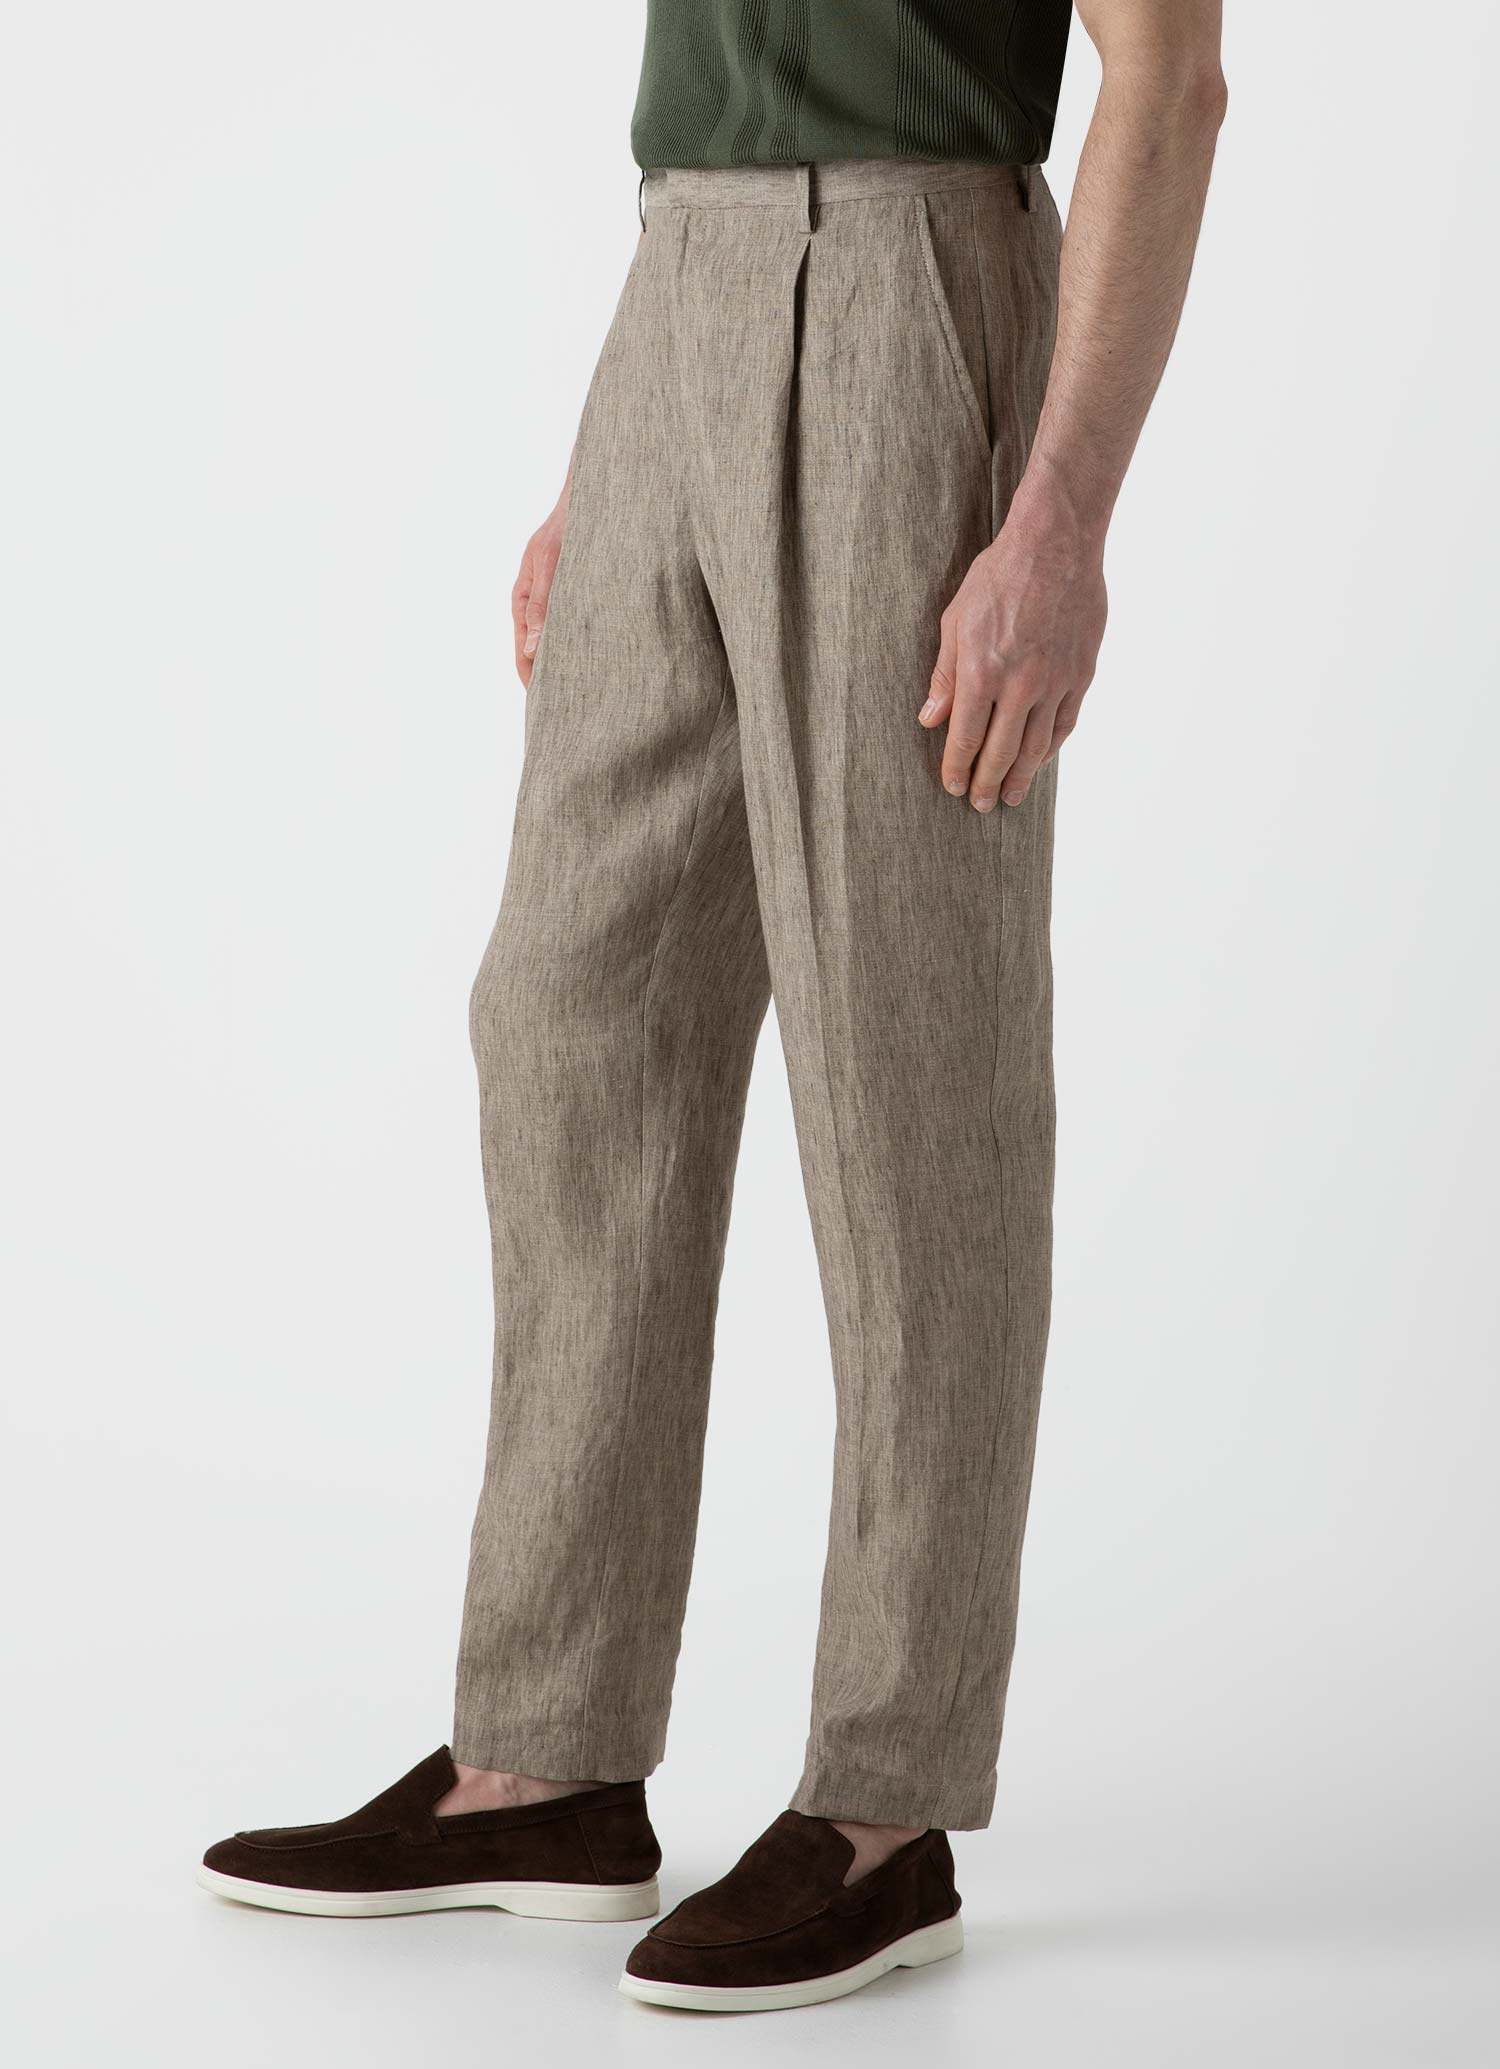 Men's Suit Pants & Trousers - Wool Dress Pants & Slim Fit Trousers |  SUITSUPPLY The Netherlands